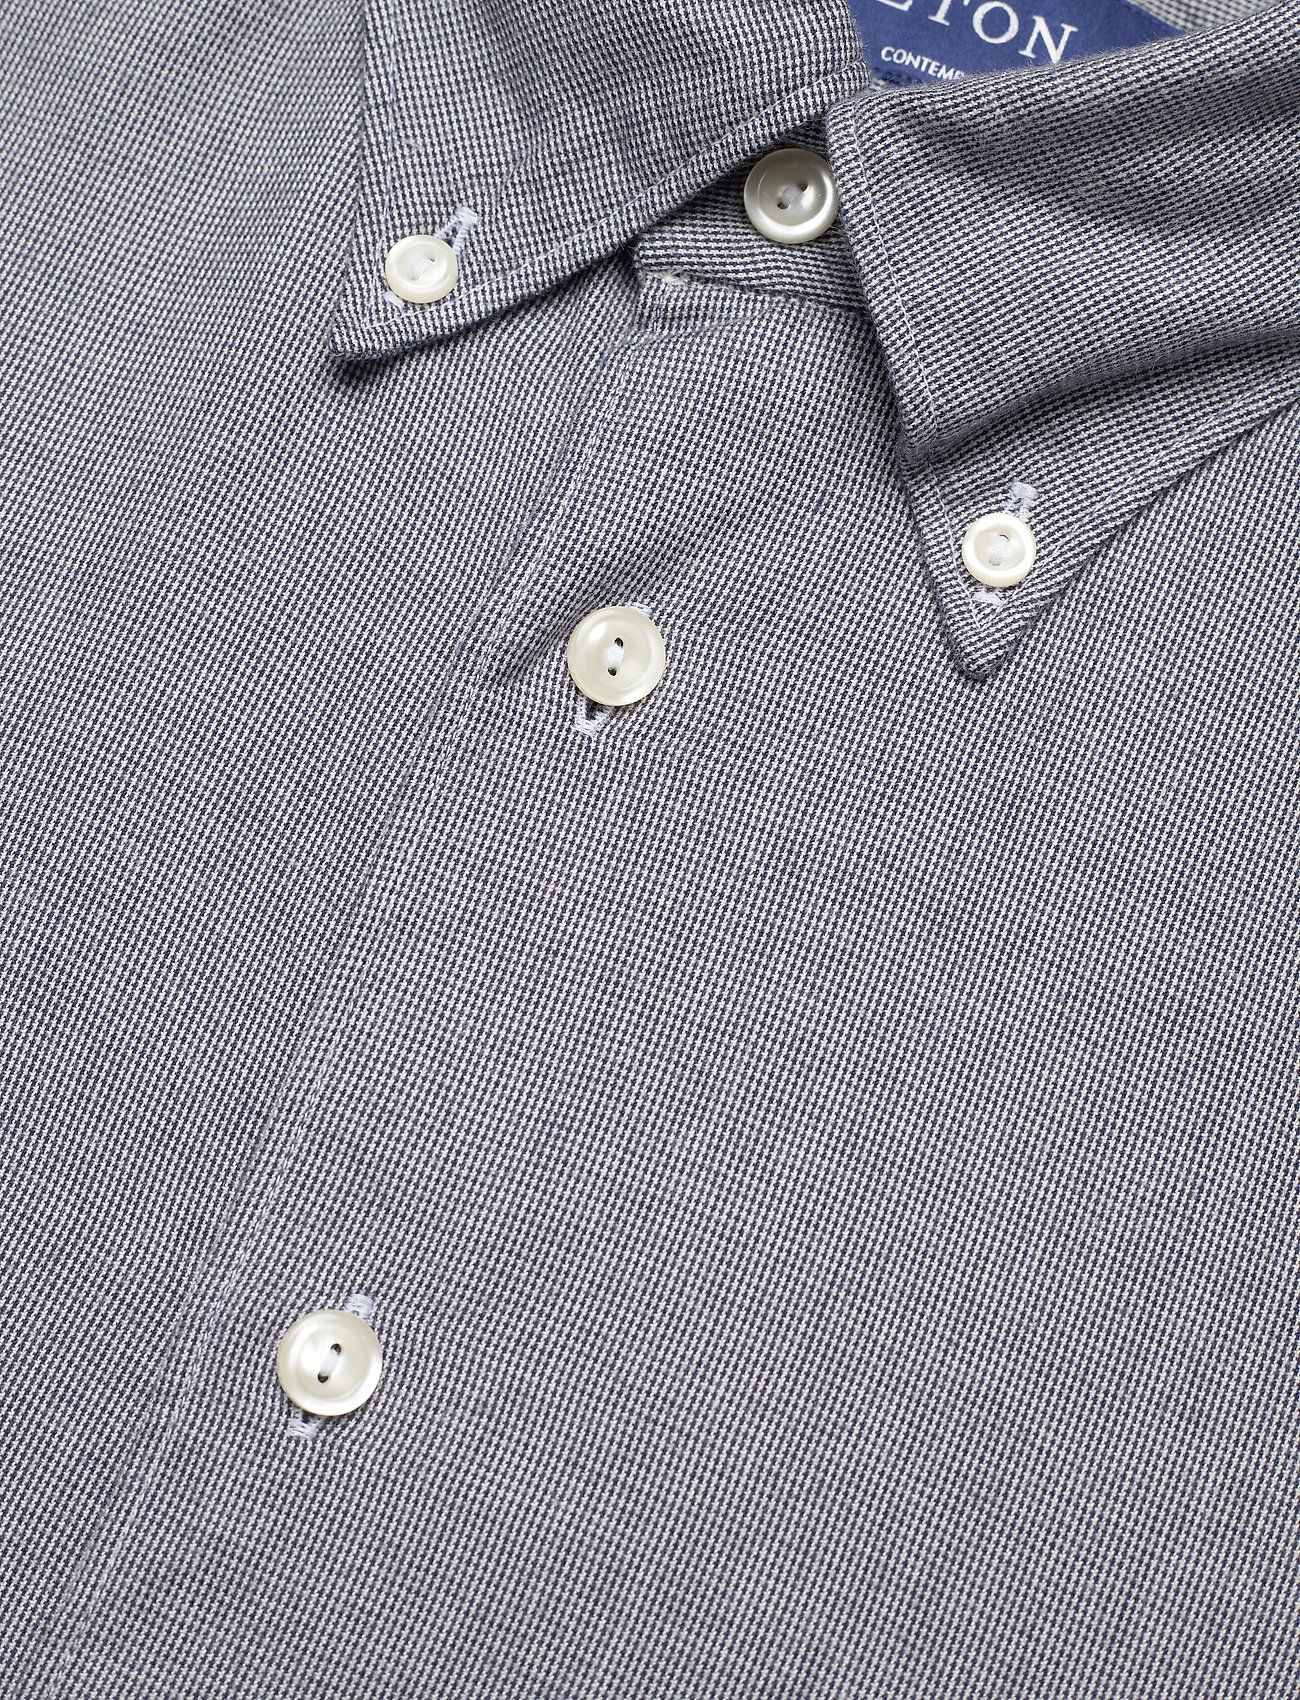 Eton - Men's shirt: Casual  Cotton Tencel - lina krekli - navy blue - 3